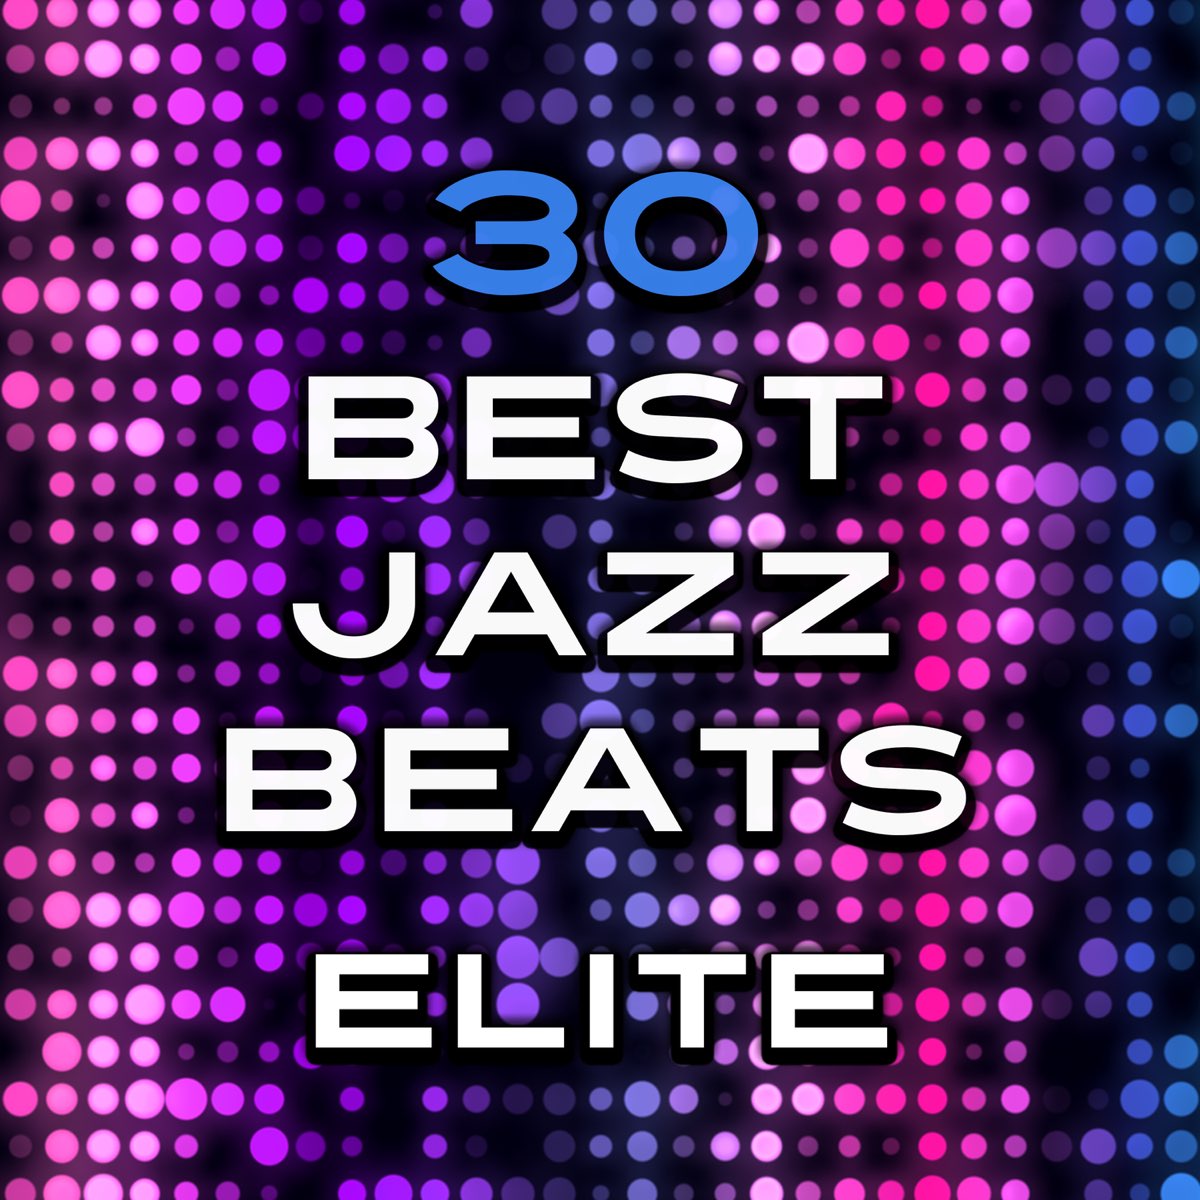 30 Best Jazz Beats: Elite by Magical Memories Jazz Academy on Apple Music